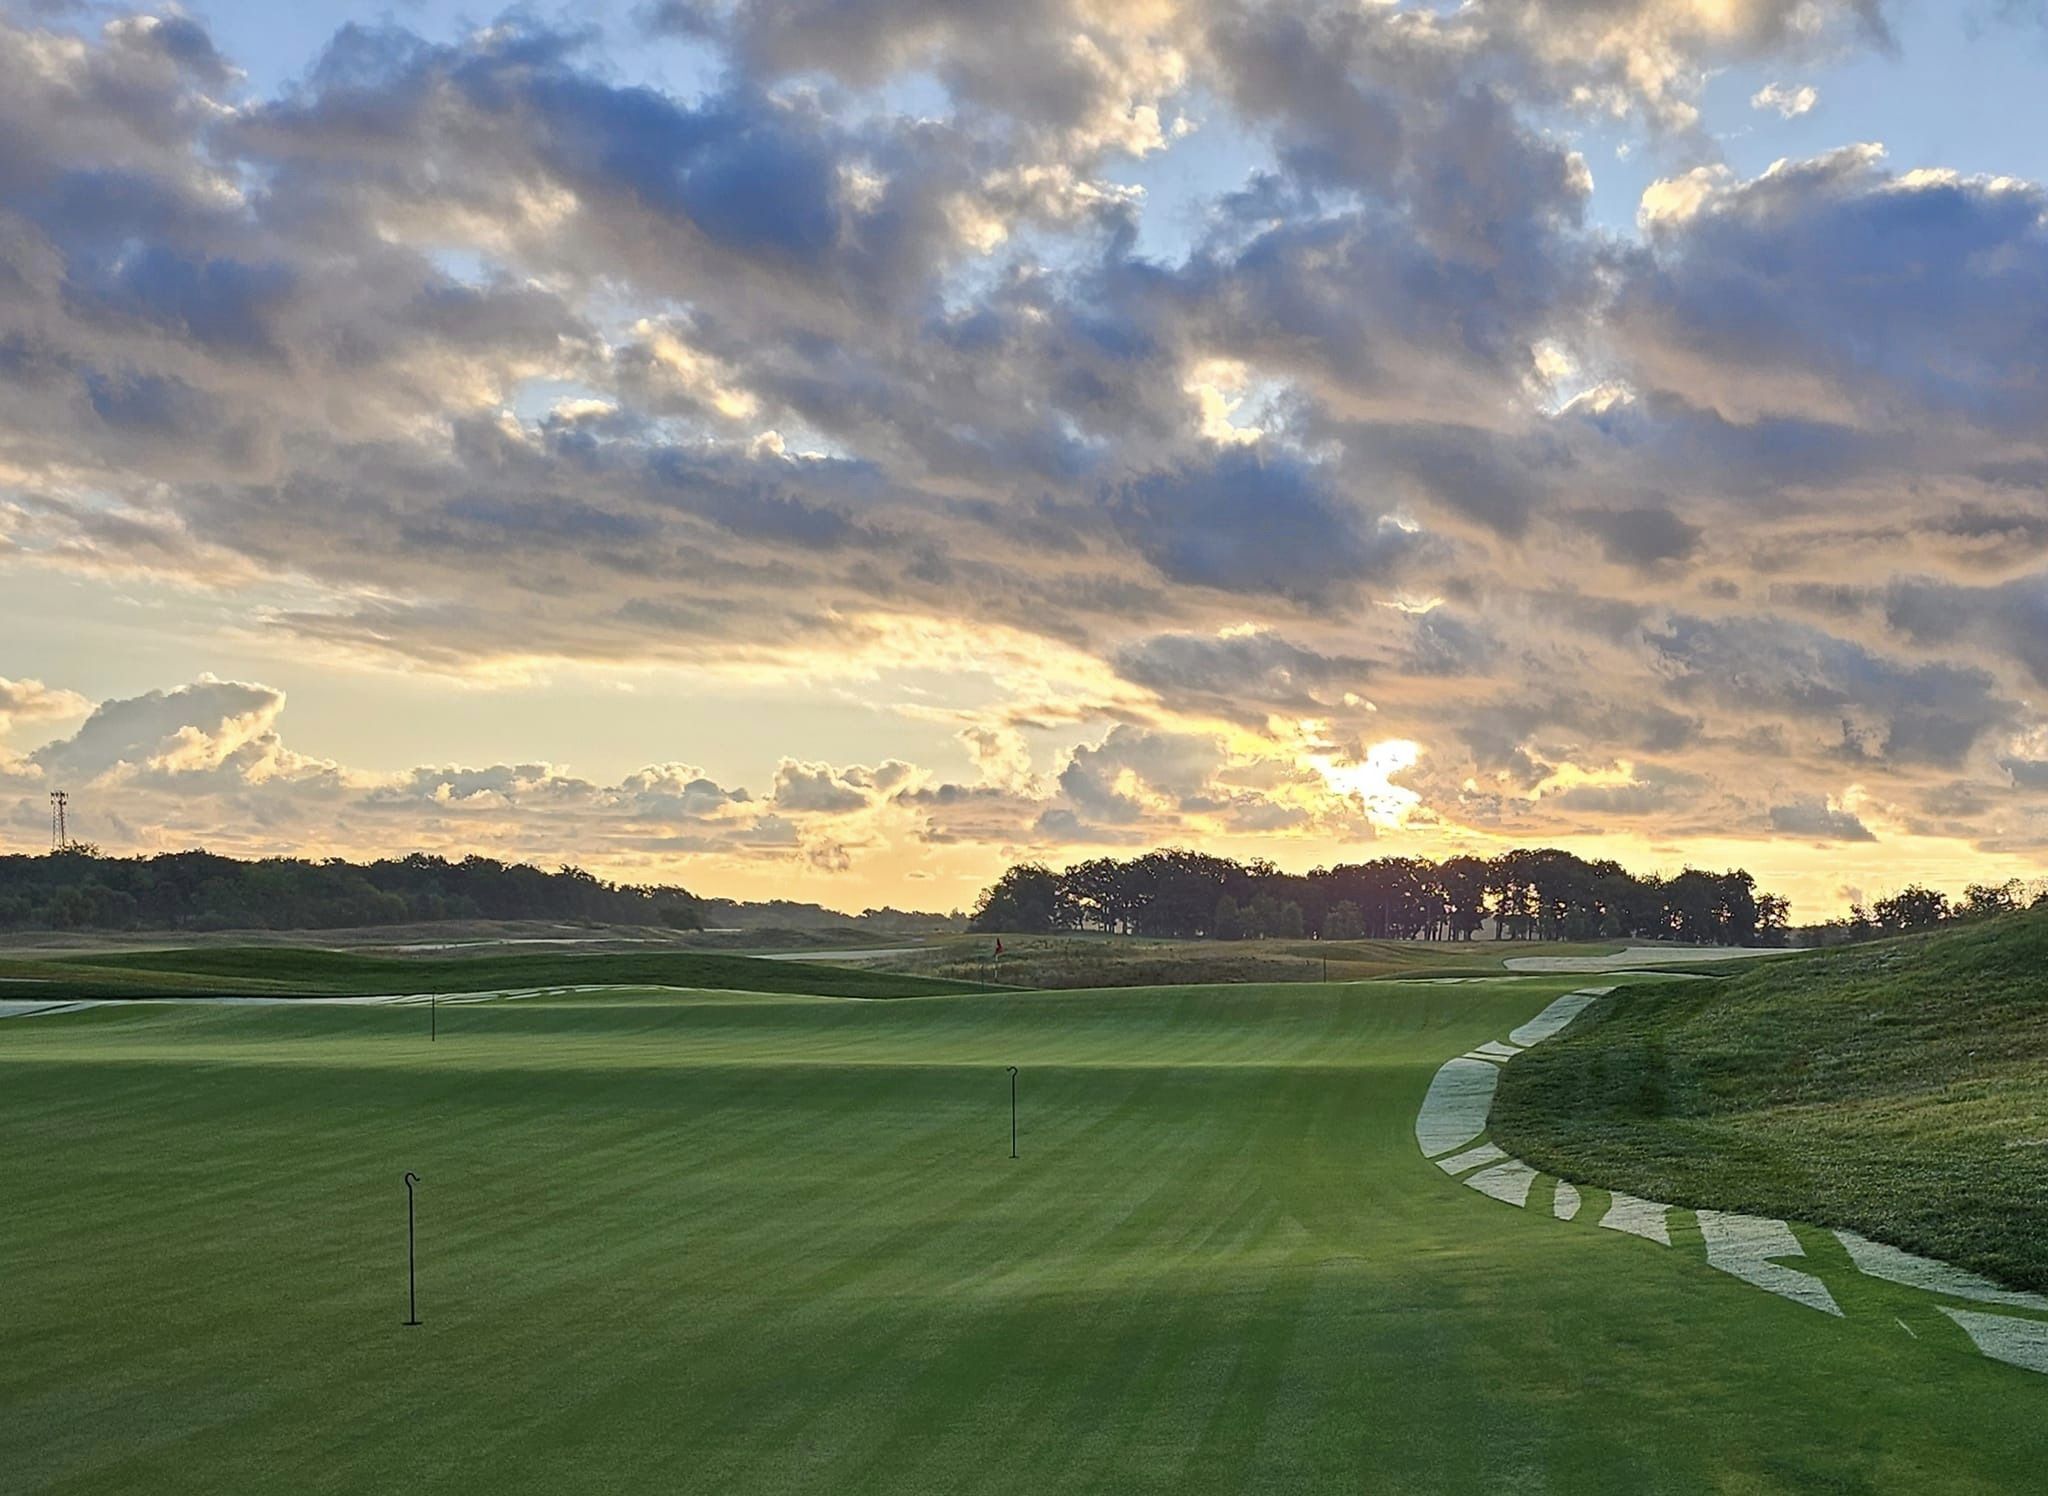 golf course at sunrise